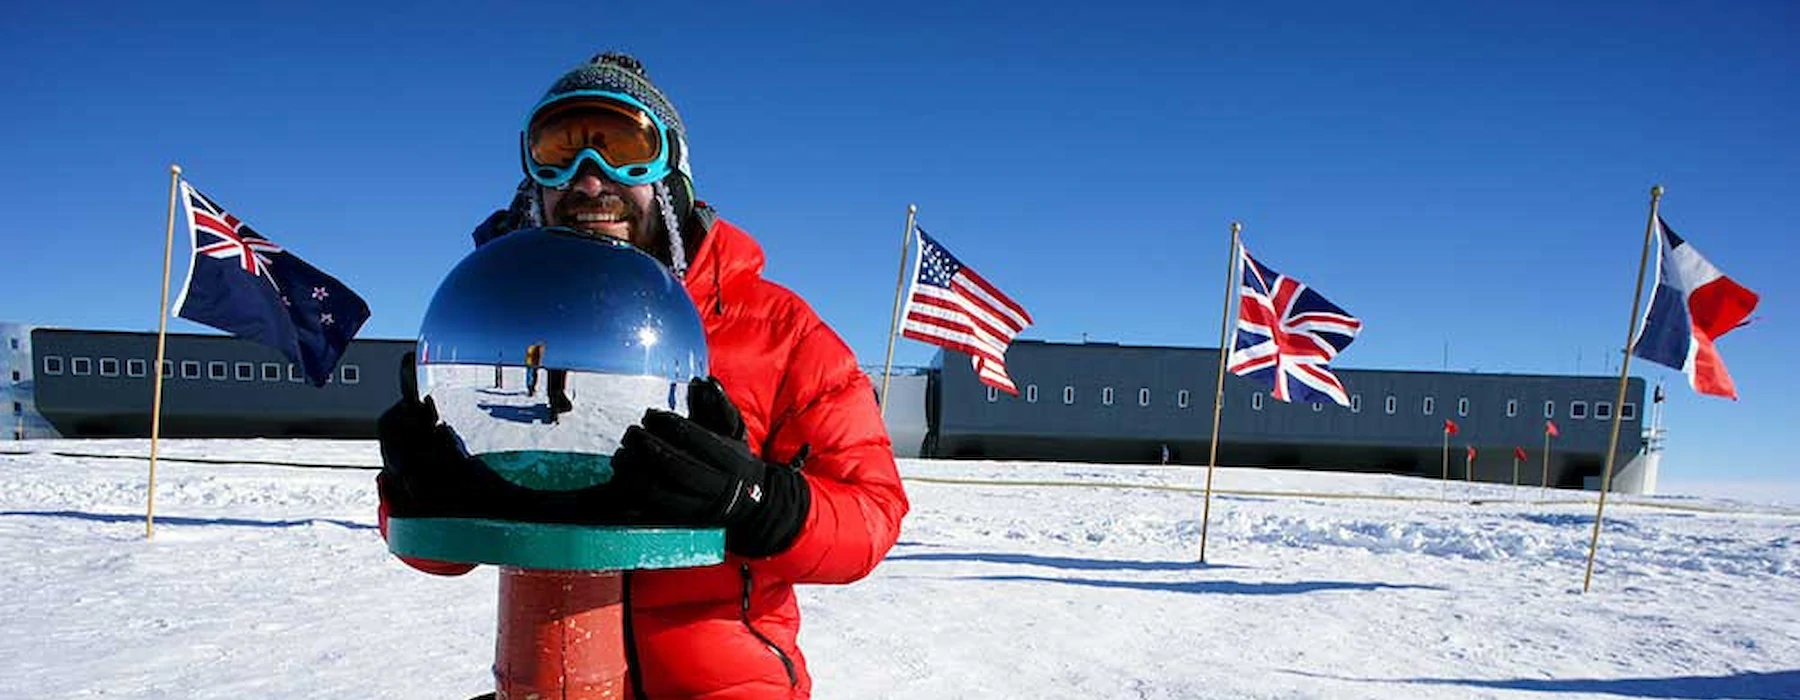 The South Pole - Ski Last Degree